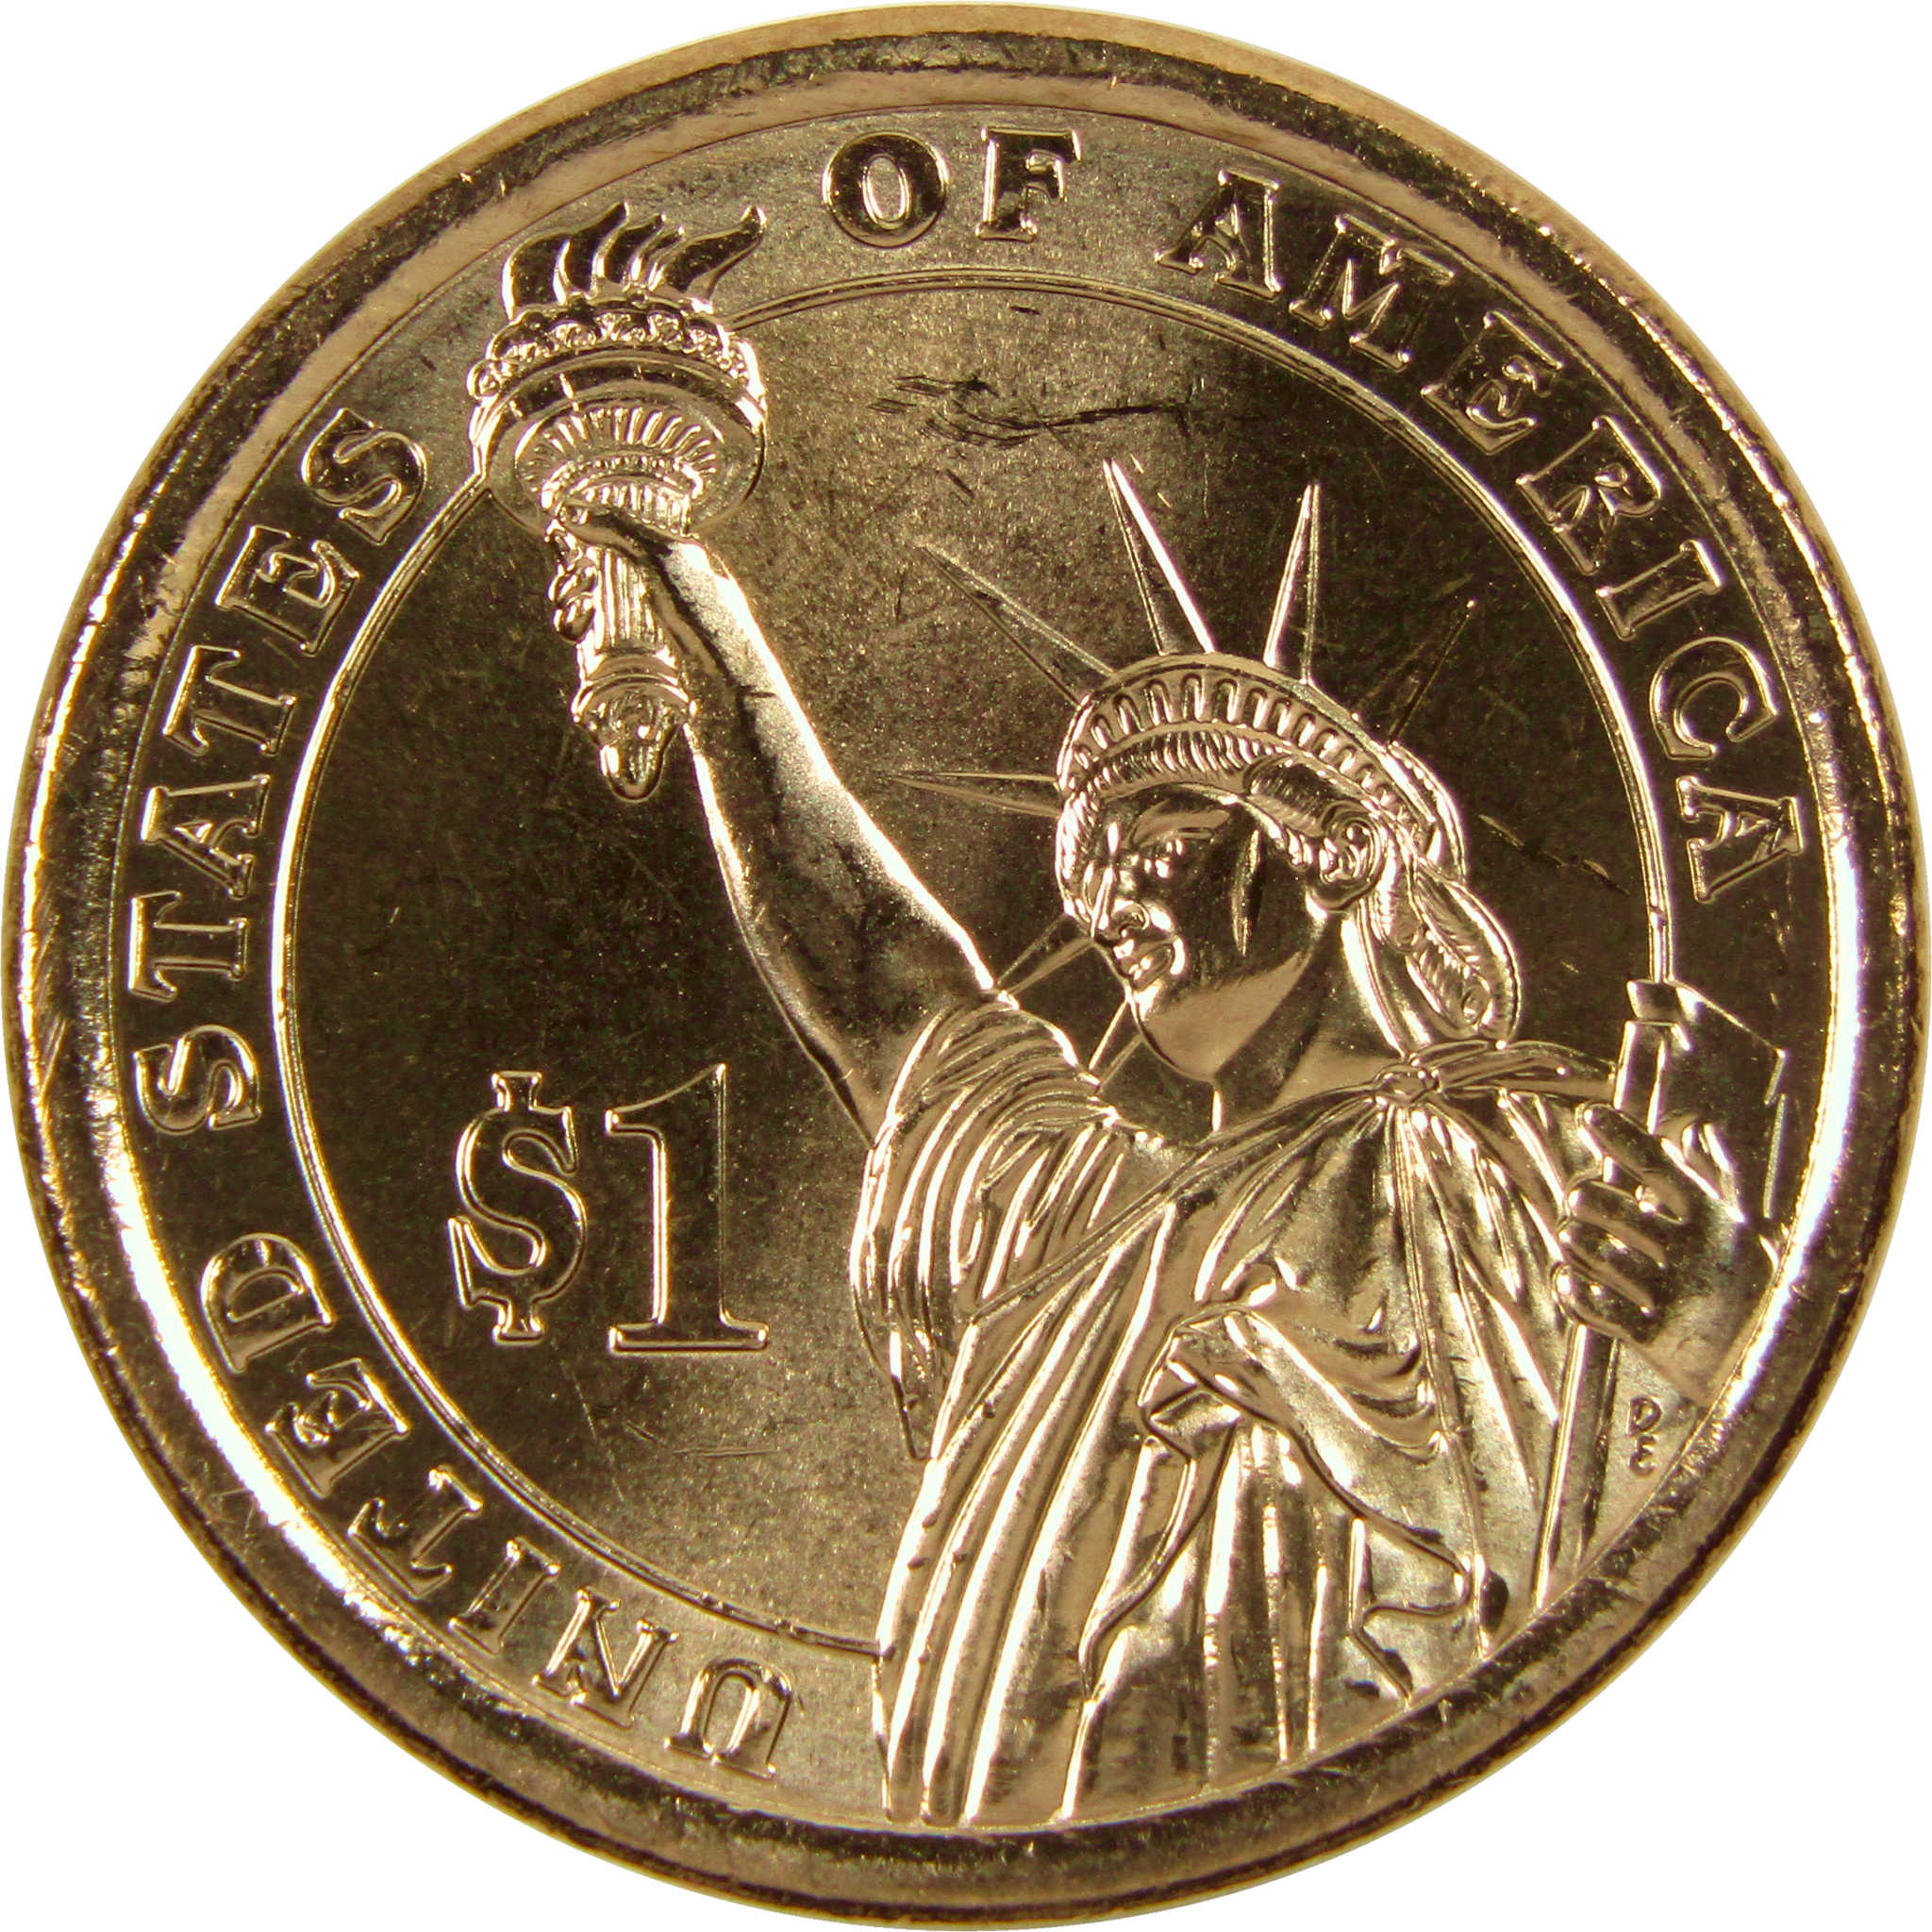 2008 D Andrew Jackson Presidential Dollar BU Uncirculated $1 Coin